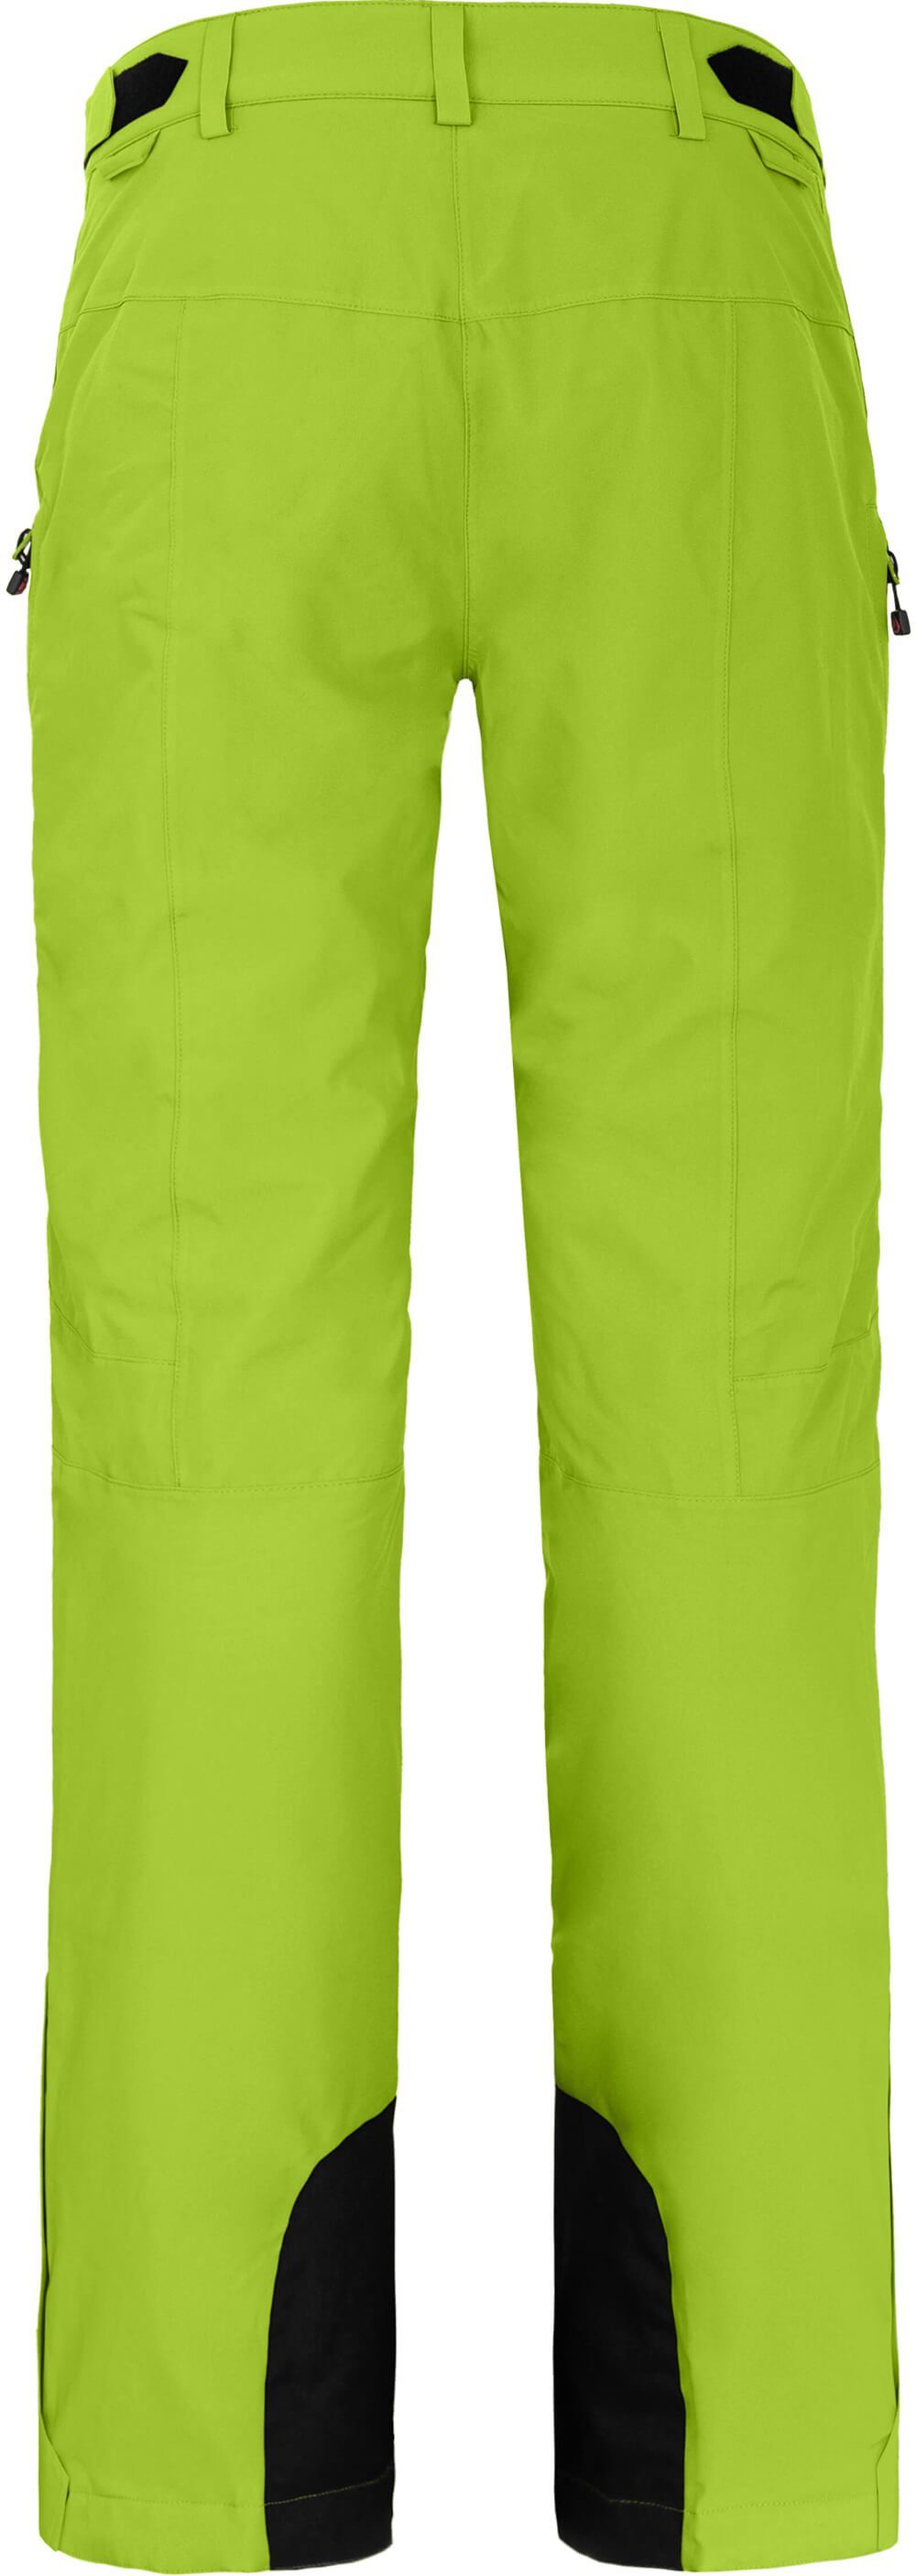 Skihose Damen grün Kurzgrößen, 20000 Bergson unwattiert, light lime Skihose, ICE Wassersäule, mm